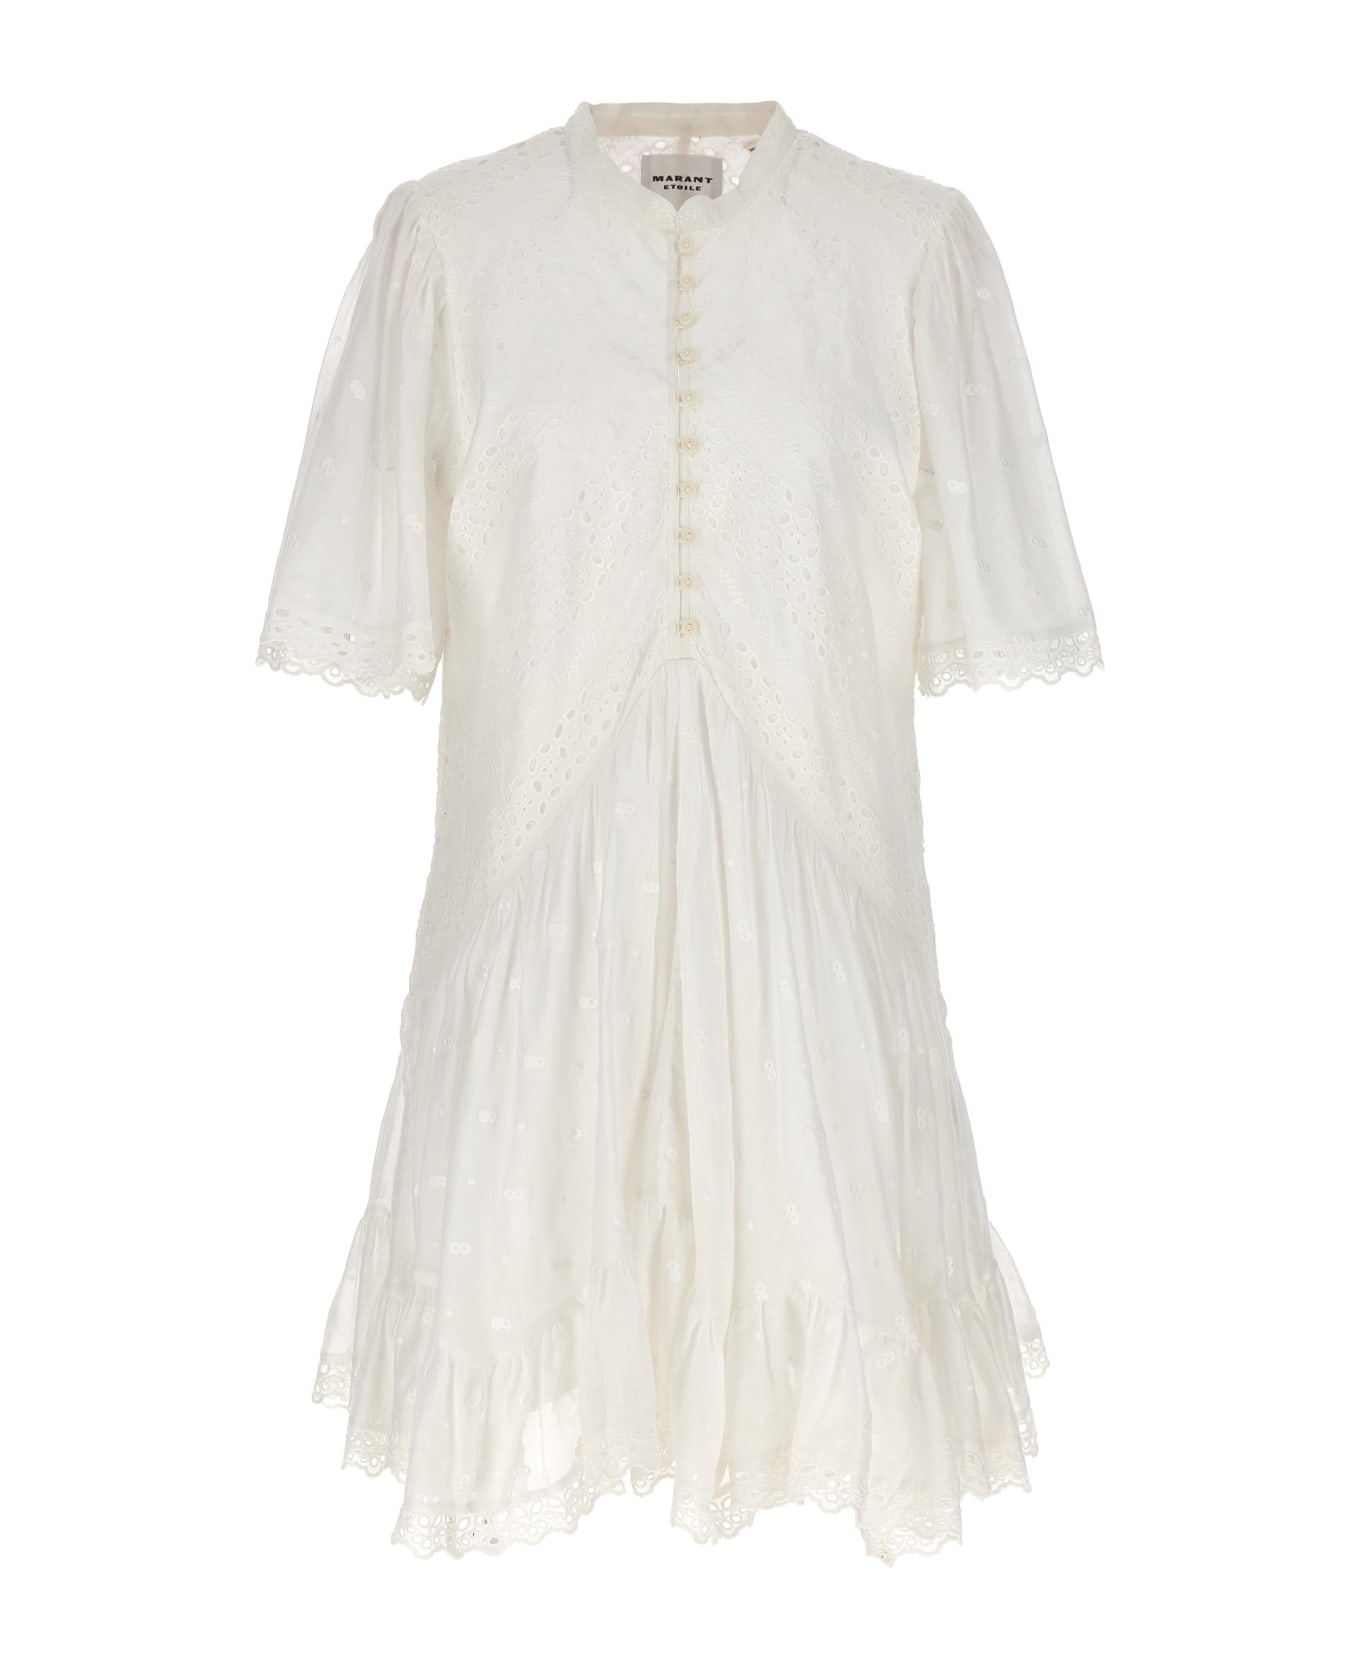 Marant Étoile 'slayae' Dress - White ワンピース＆ドレス